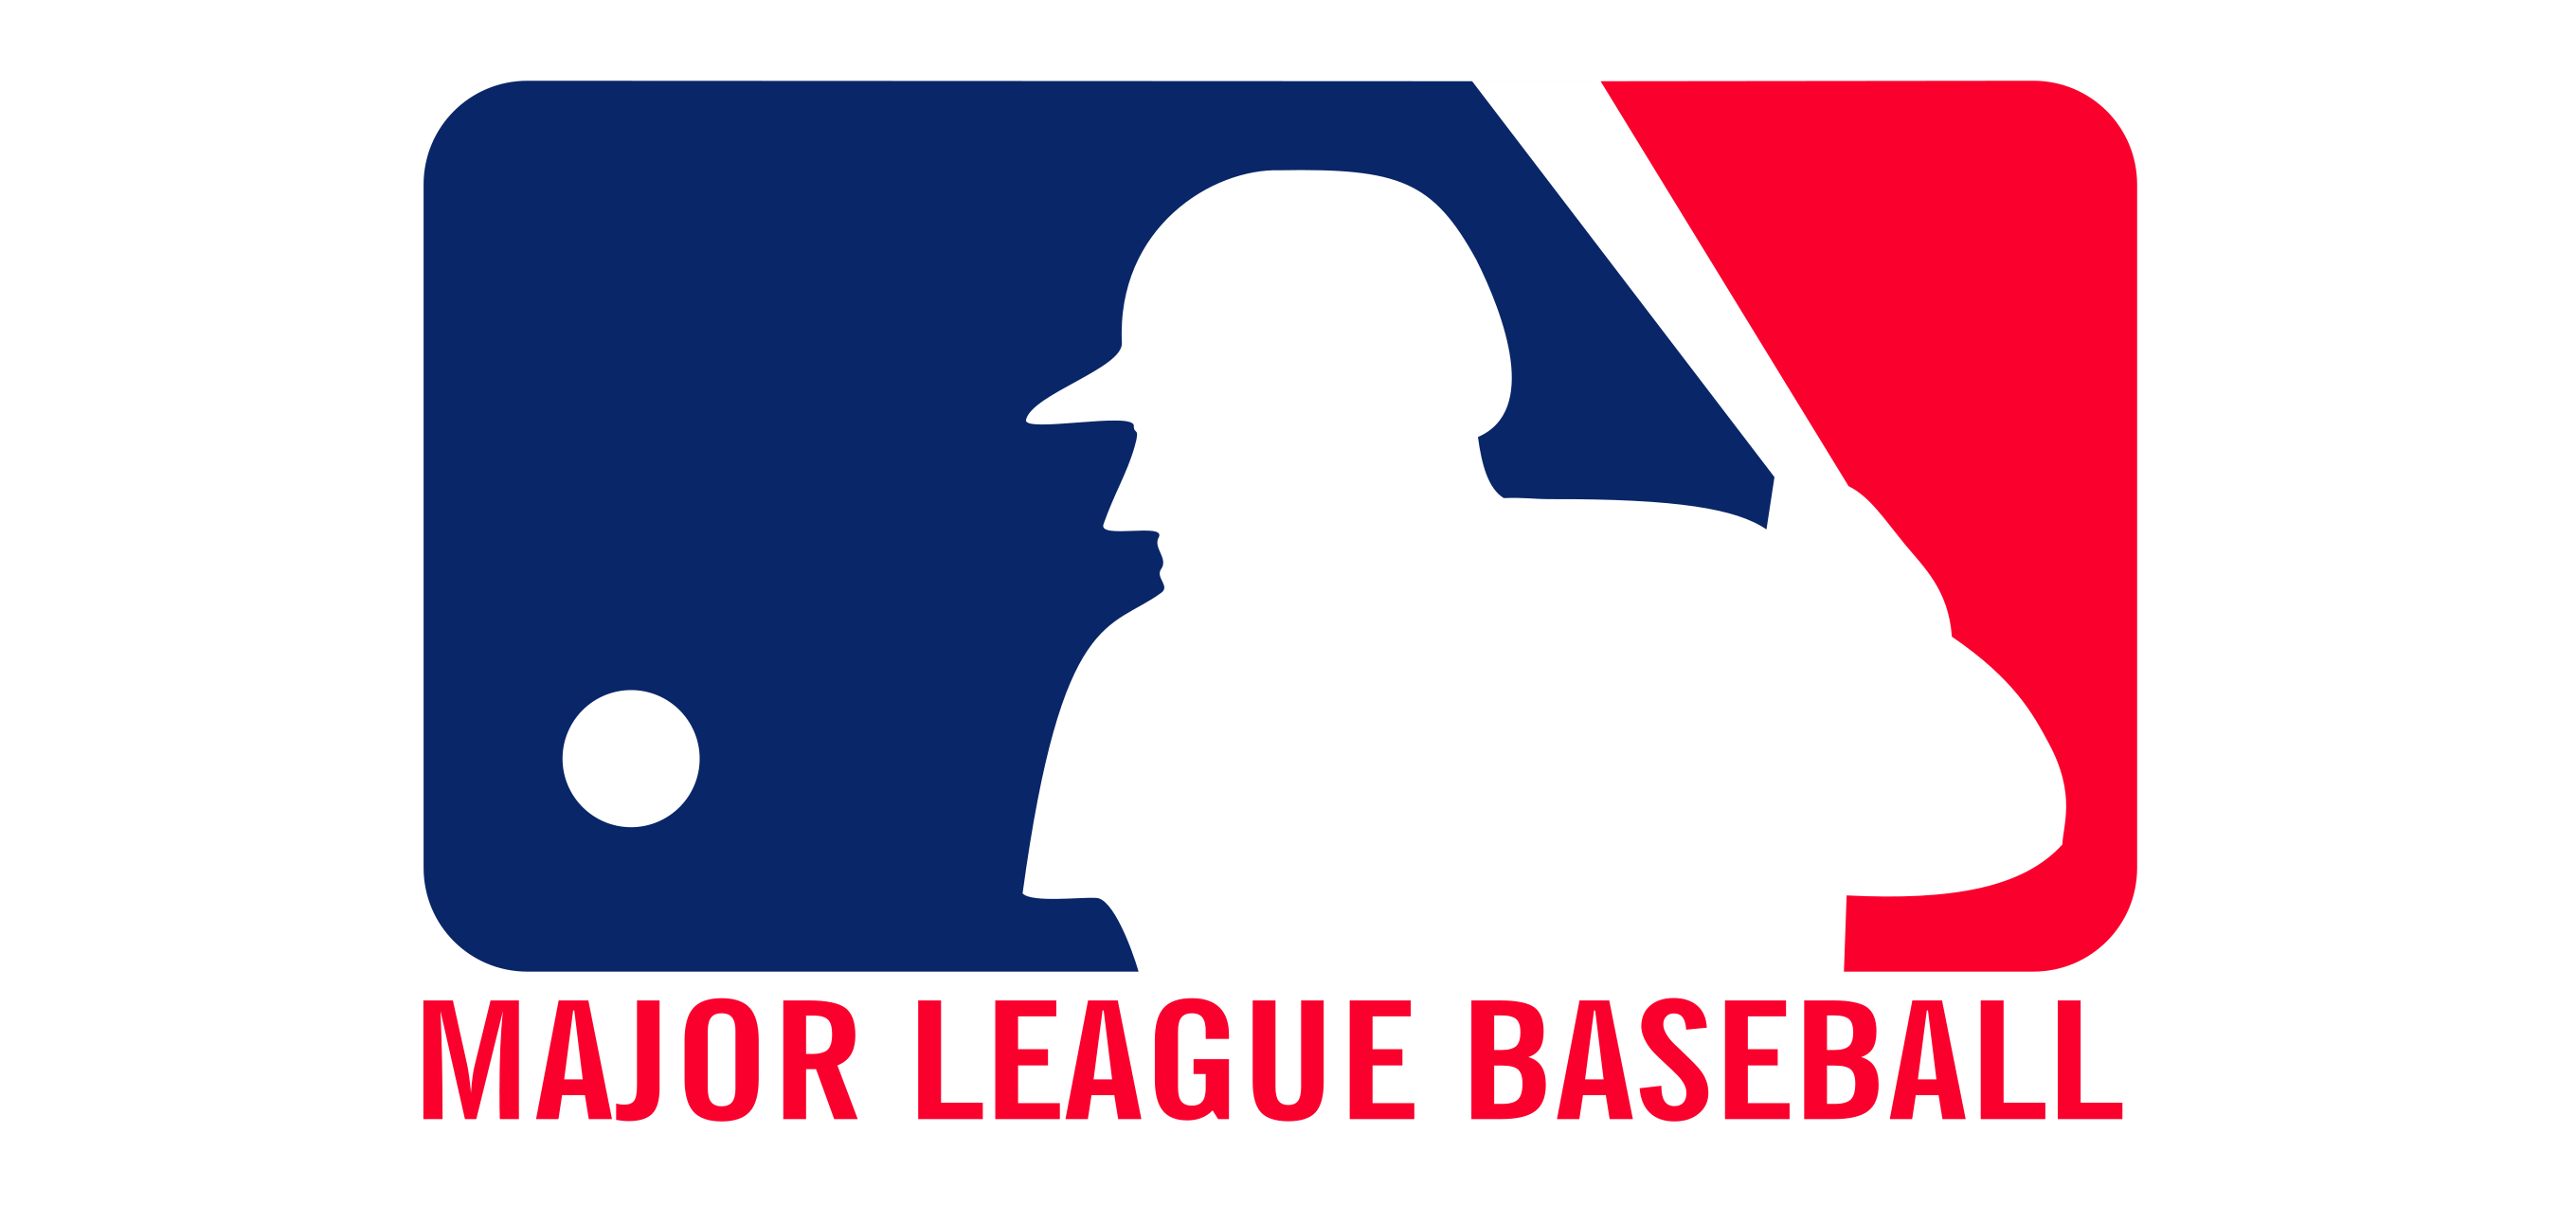 MLB playoff races tight as season nears finish The Rambler